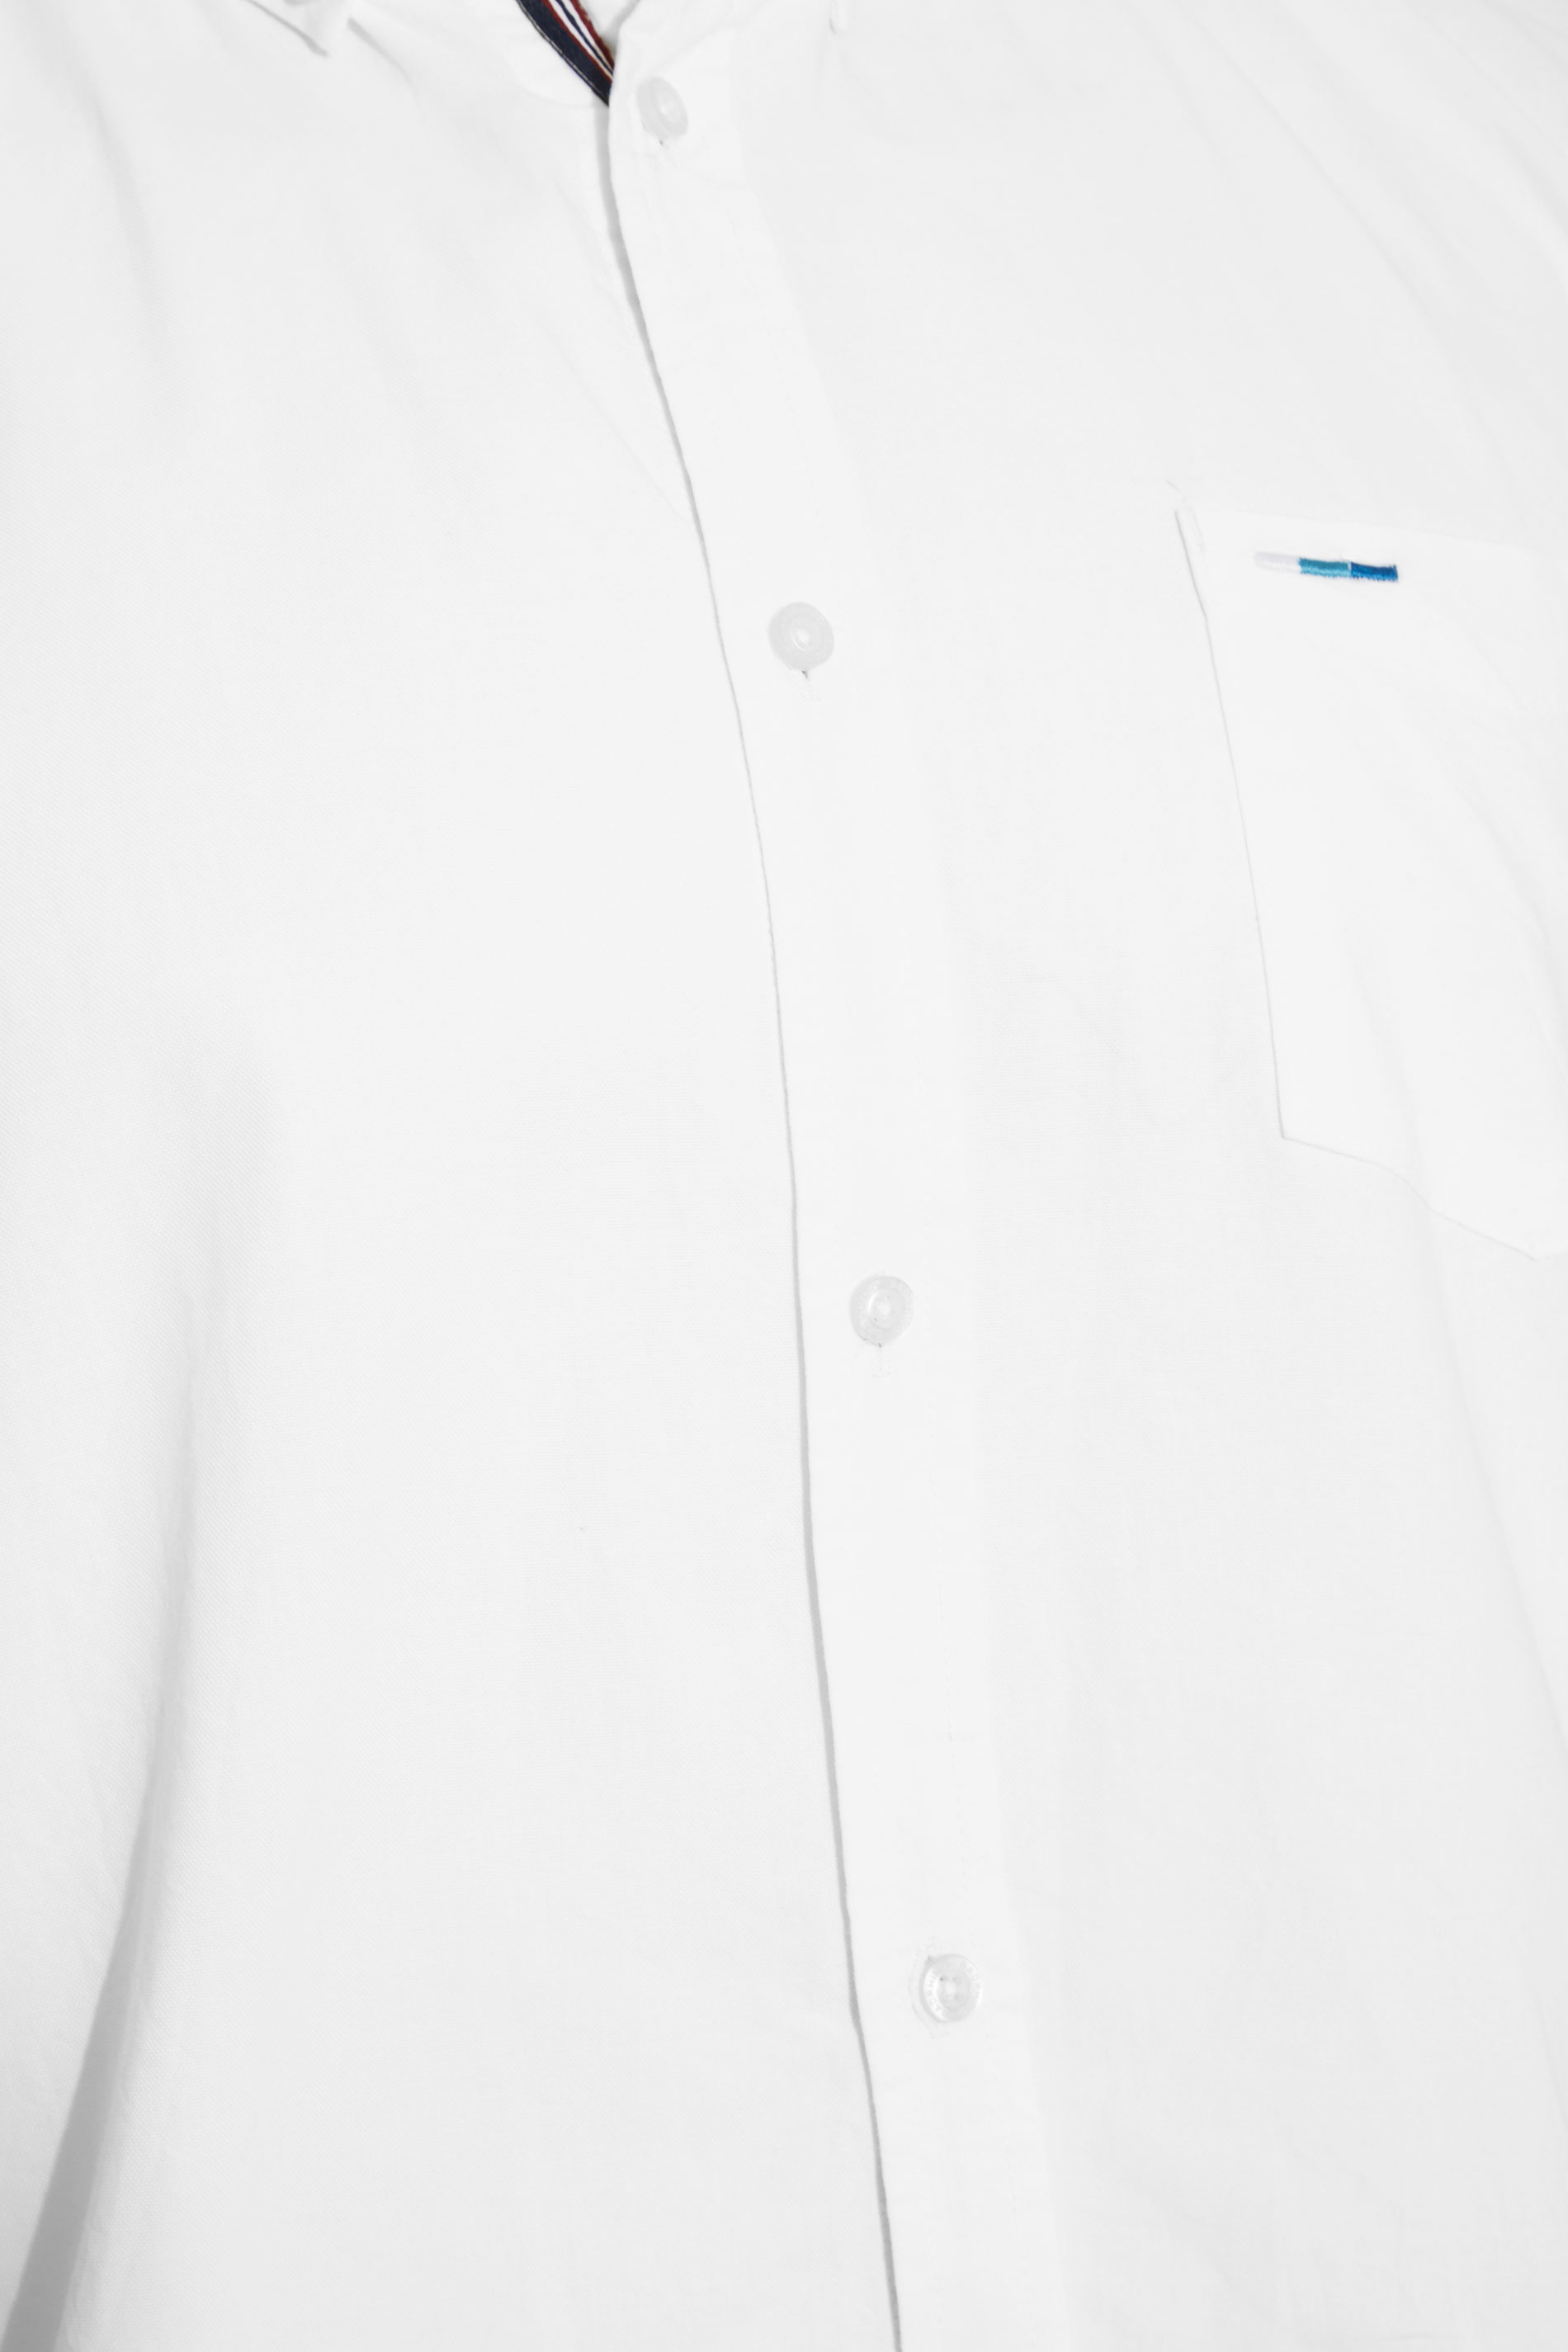 BadRhino White Essential Short Sleeve Oxford Shirt | BadRhino 2